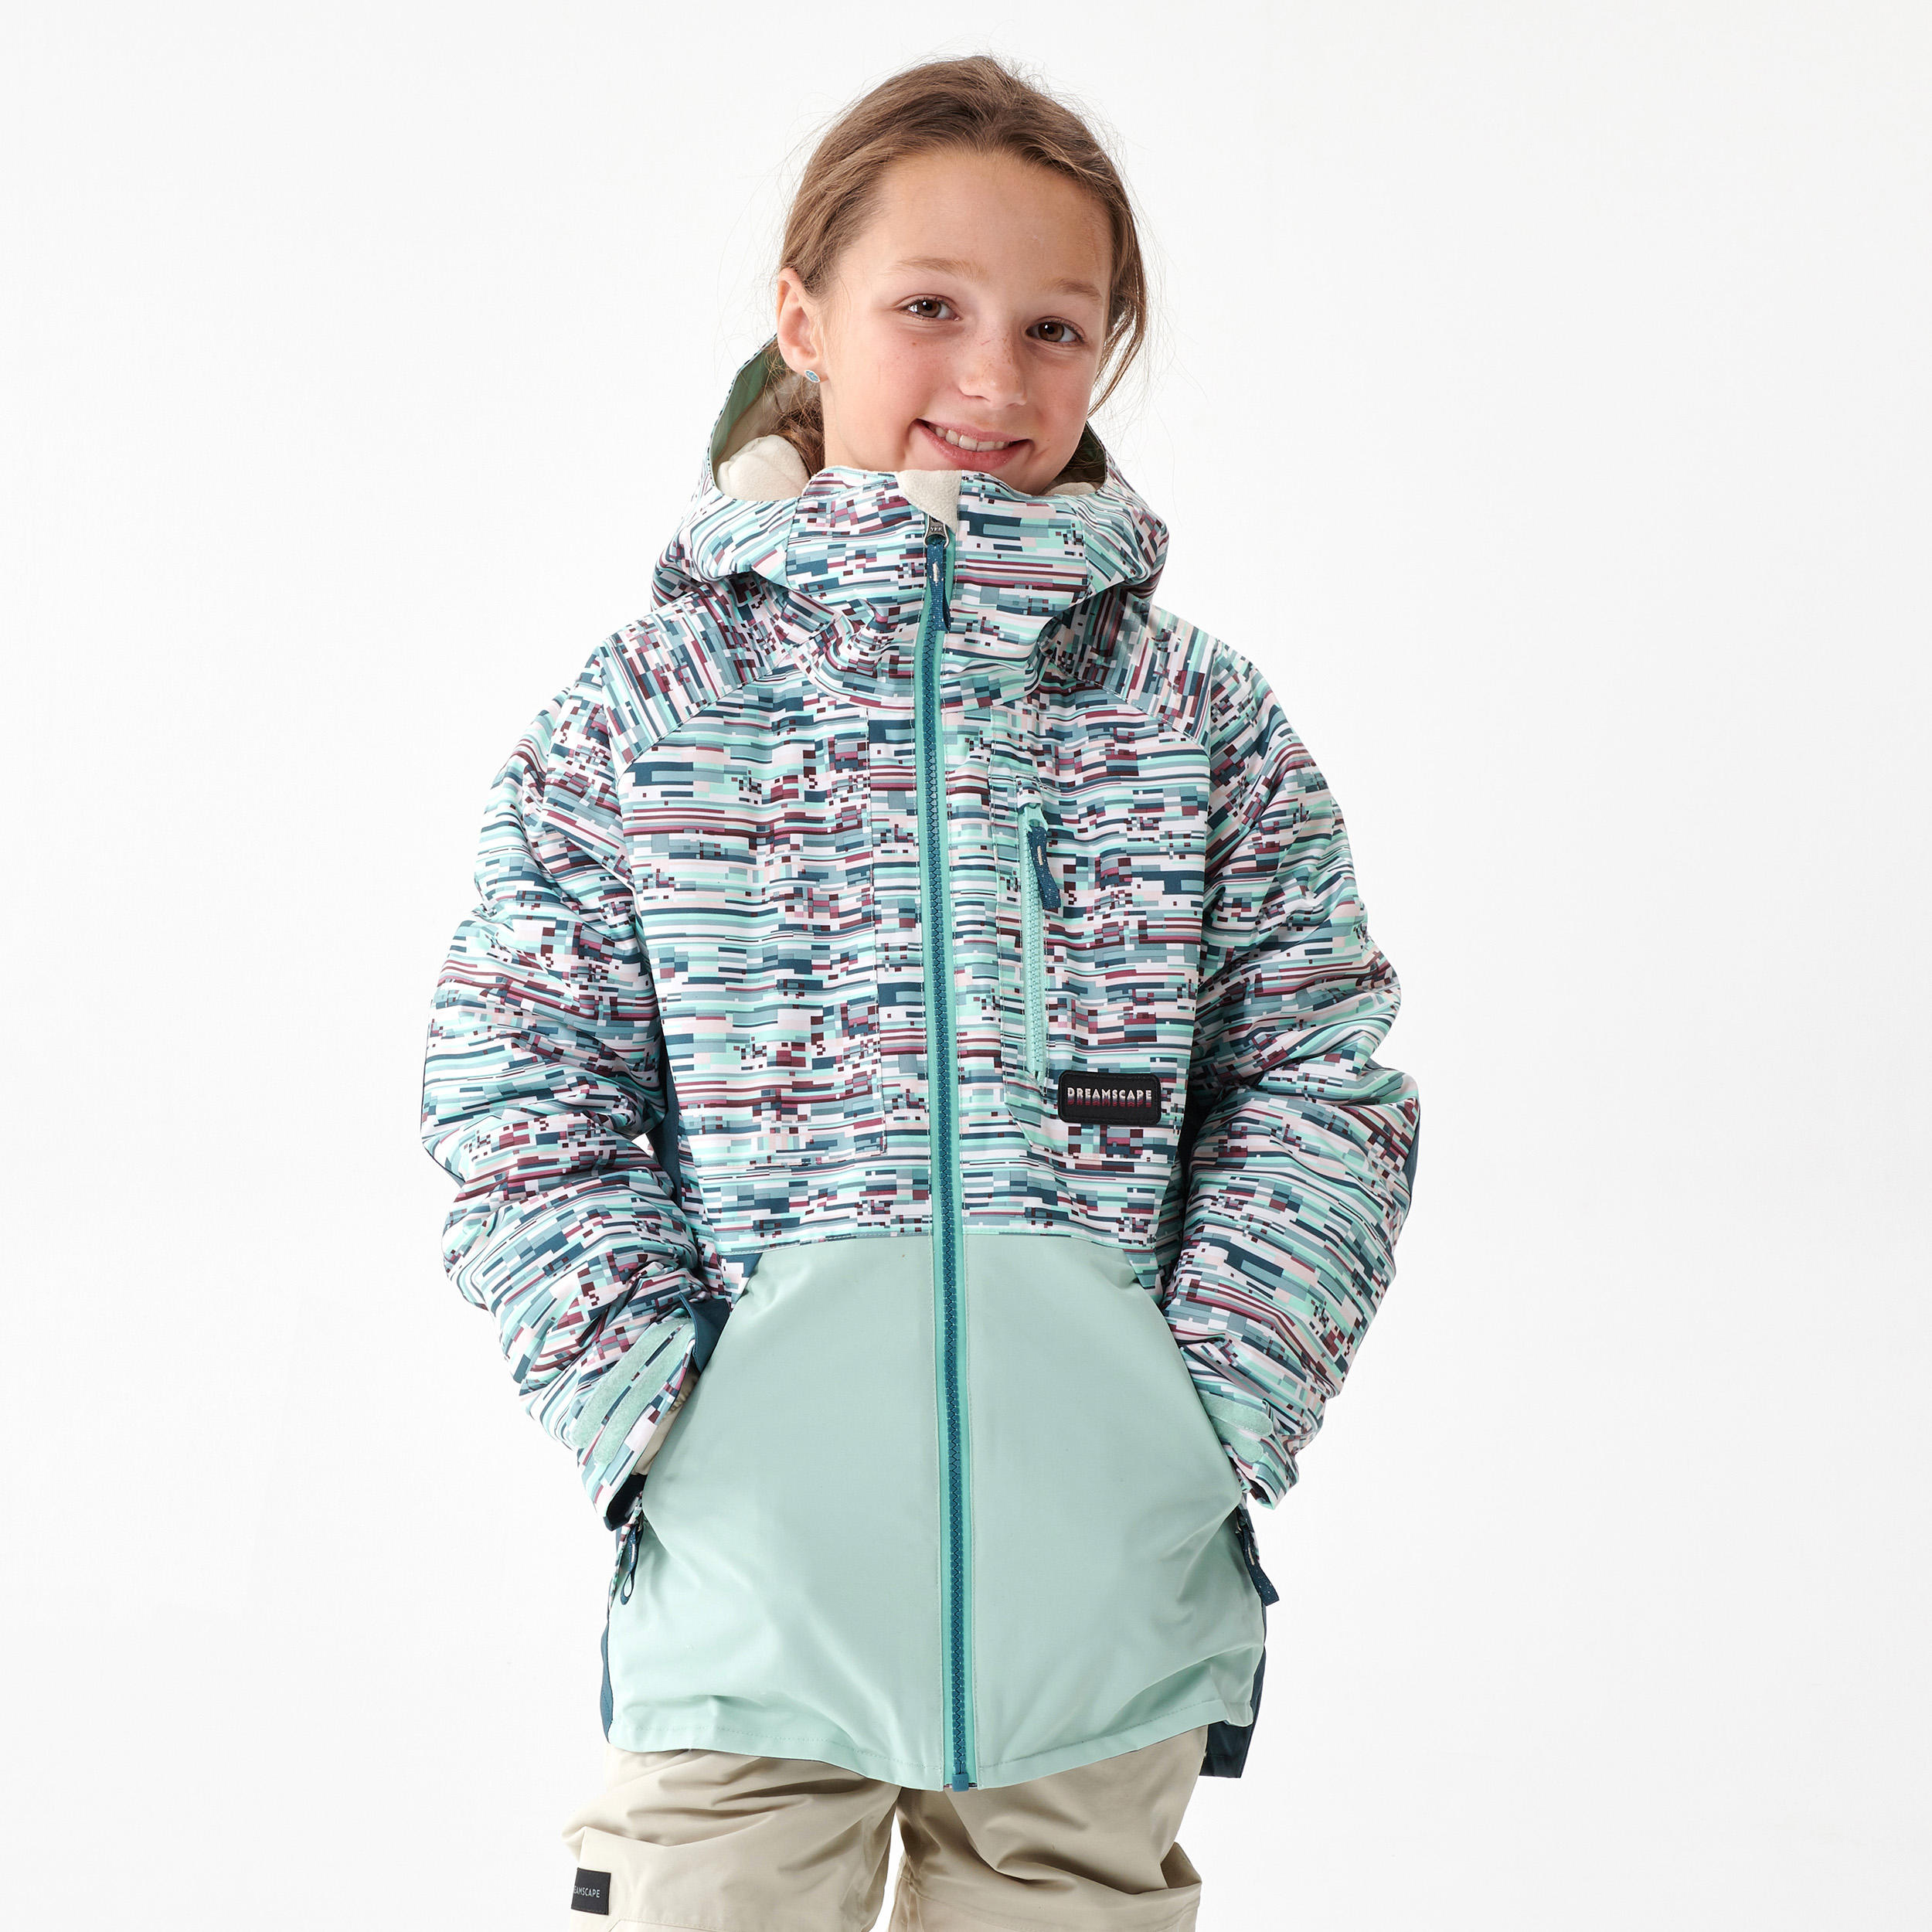 Kids' Snowboard Jacket - SNB 500 Blue - Acid green - Dreamscape - Decathlon